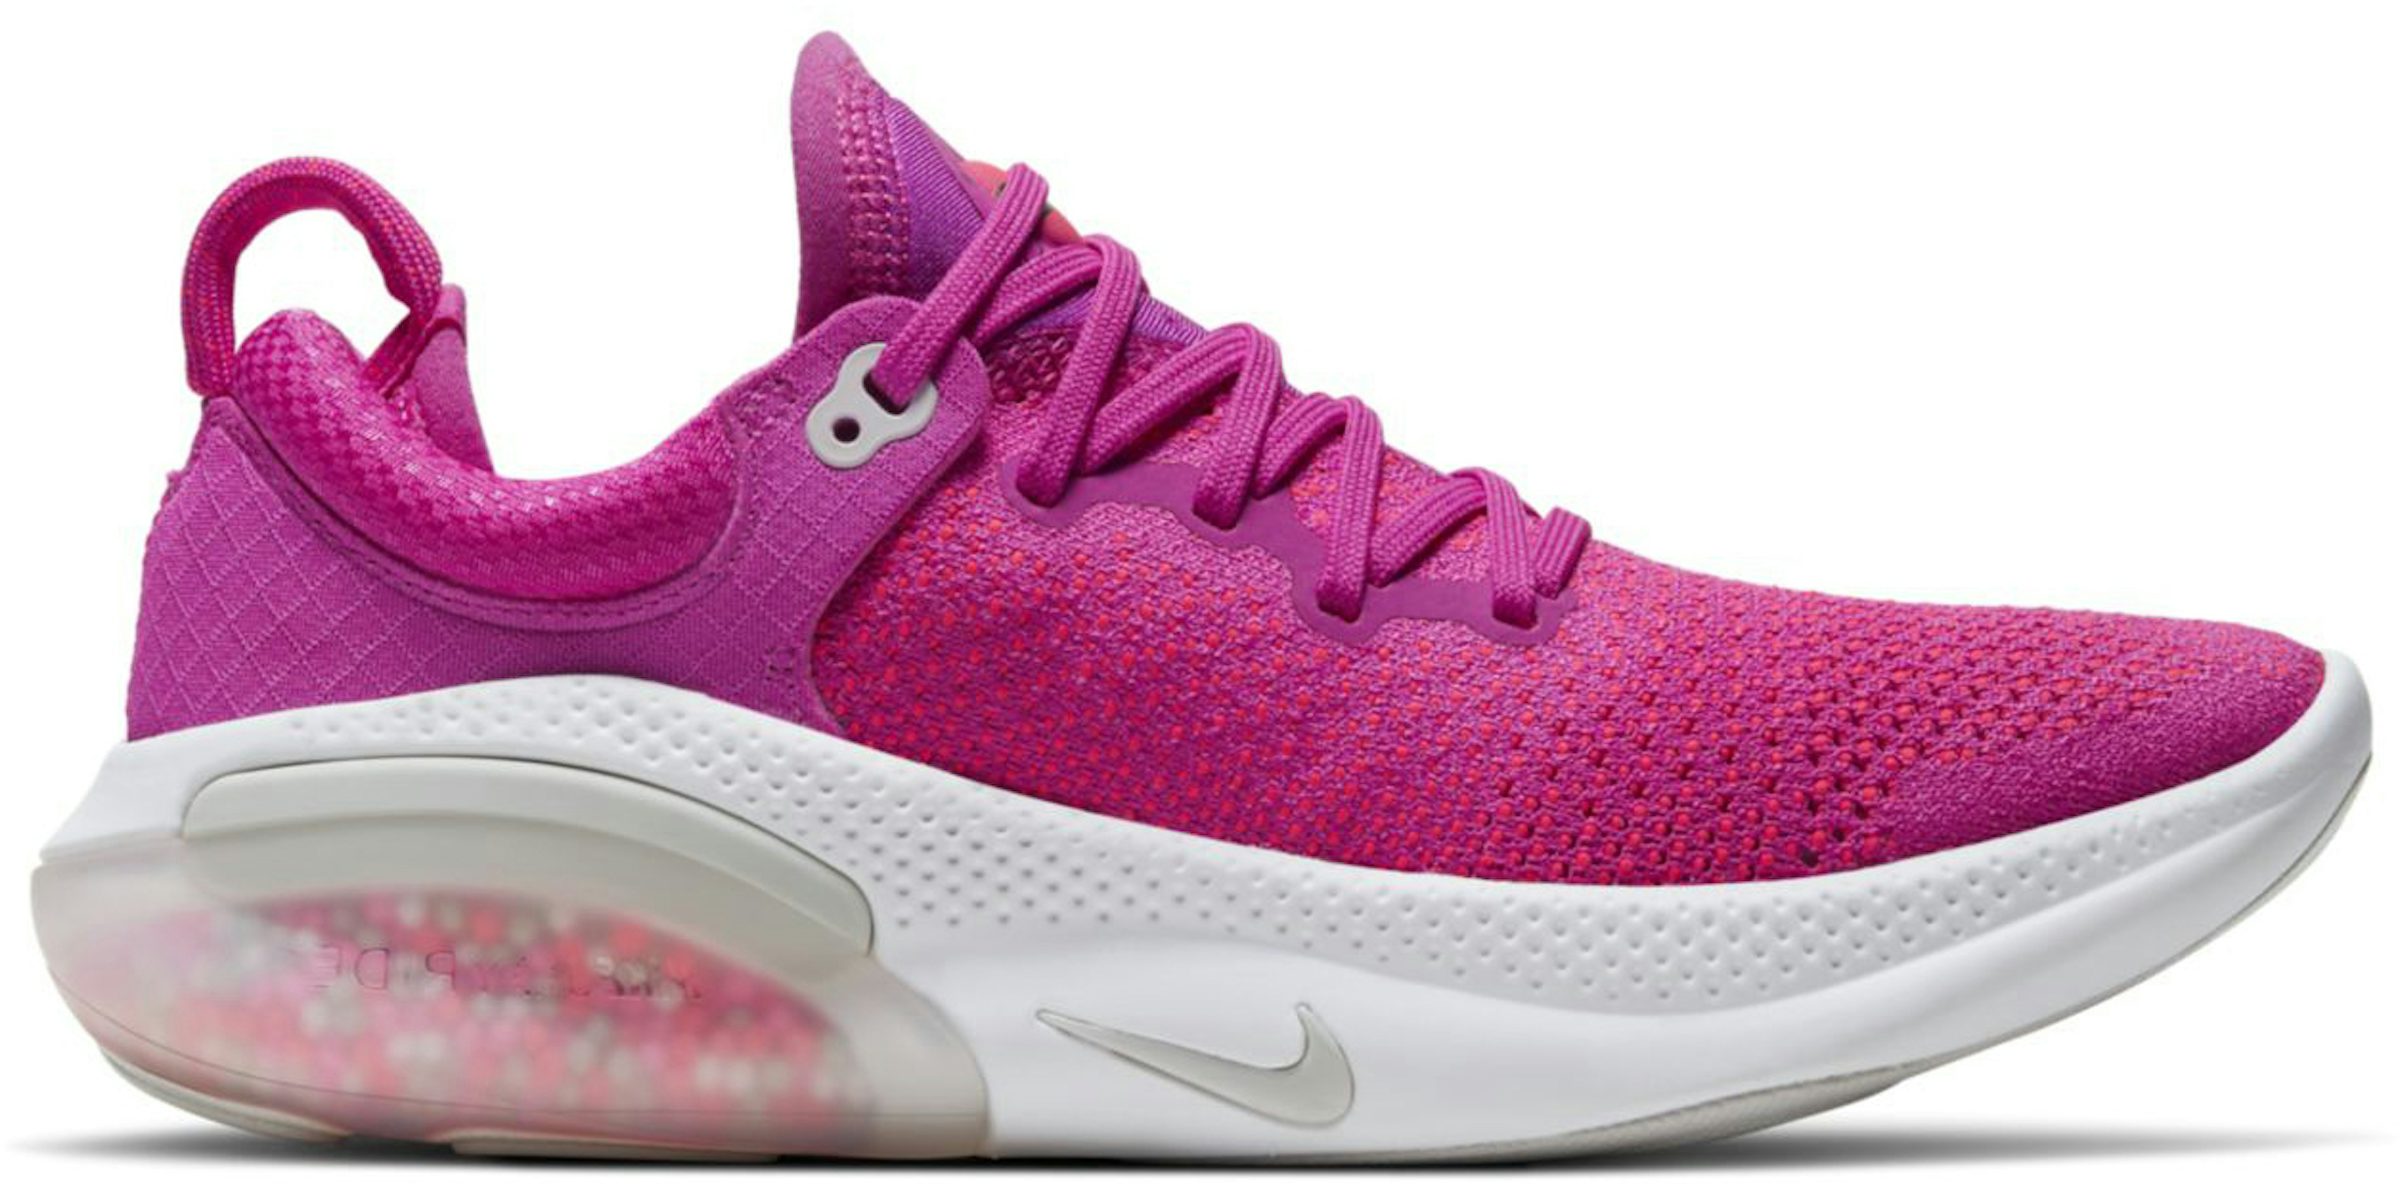 geld apotheker Recensent Nike Joyride Run Flyknit Fire Pink (Women's) - AQ2731-603 - US